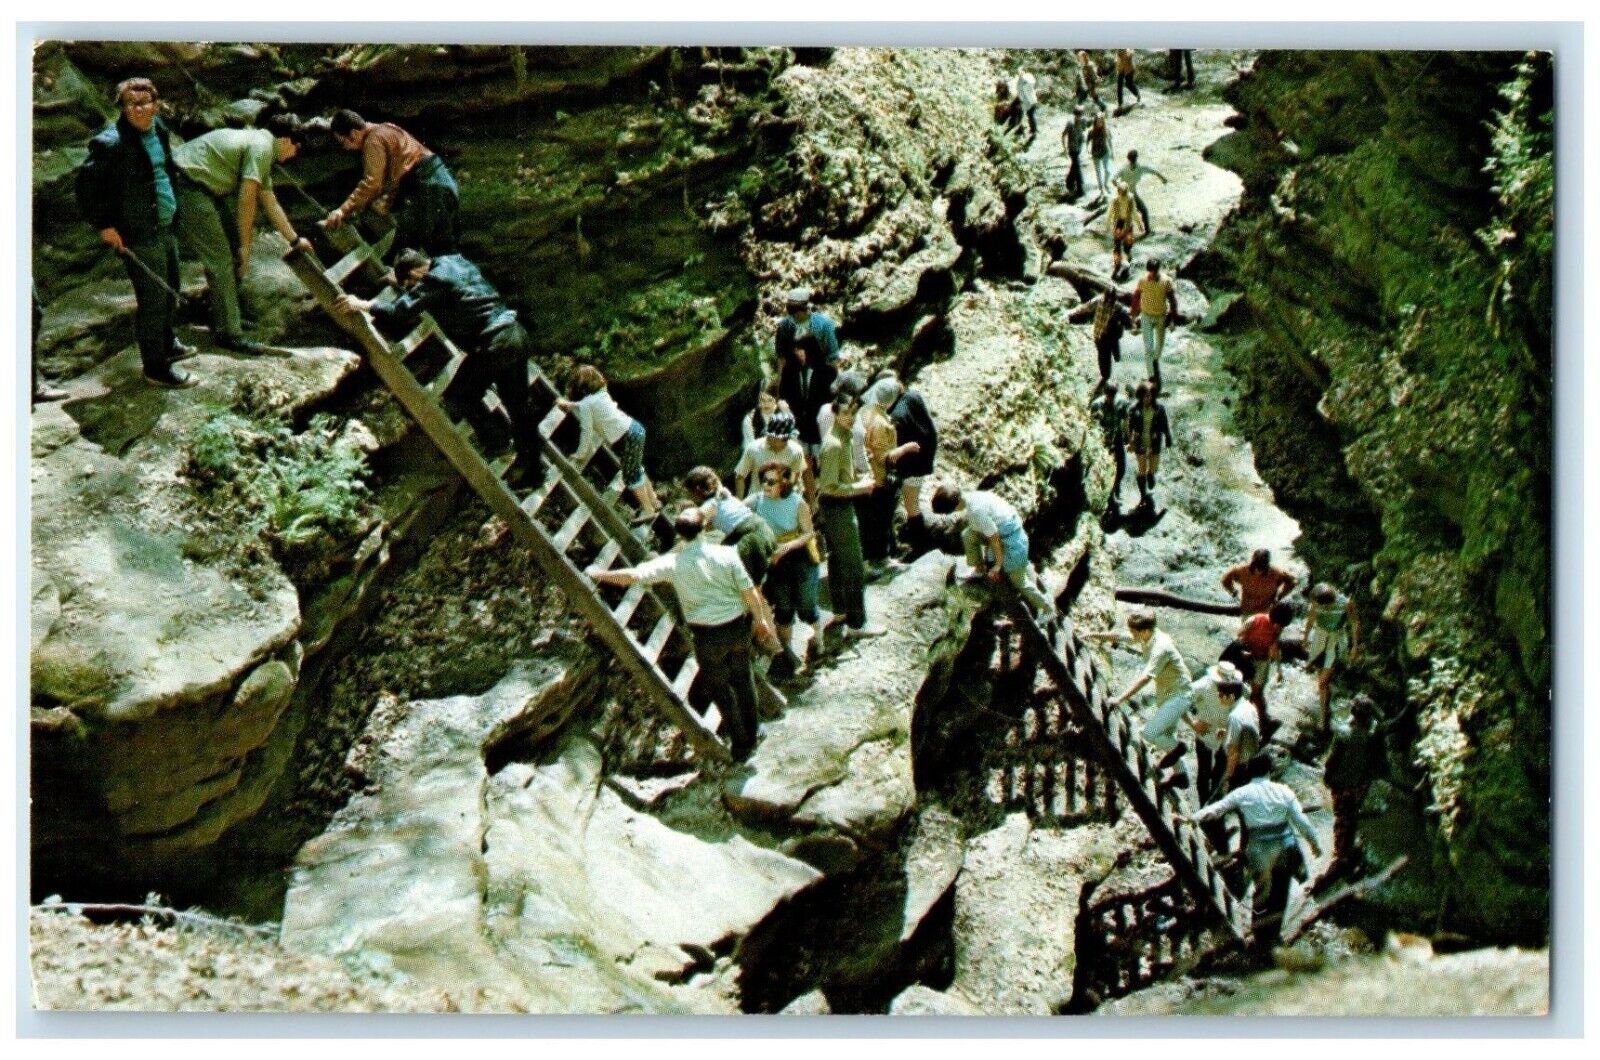 c1960 Parke County Indiana Ladder Trail Turkey Run State Park Vintage Postcard